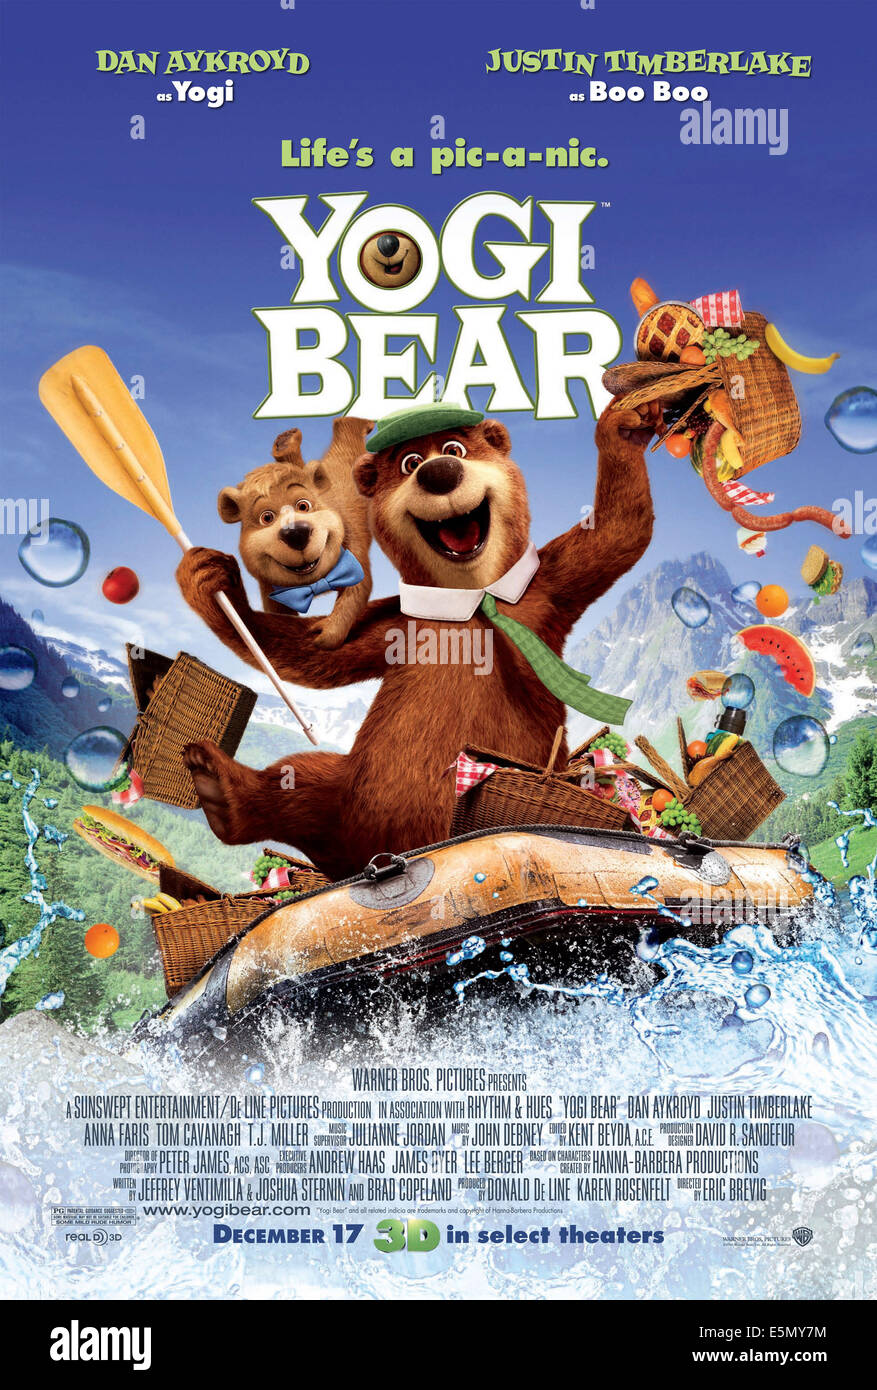 YOGI BEAR, von links: Boo-Boo Bear (Stimme: Justin Timberlake), Yogi Bear (Stimme: Dan Aykroyd) auf Plakatkunst, 2010. © Warner Stockfoto